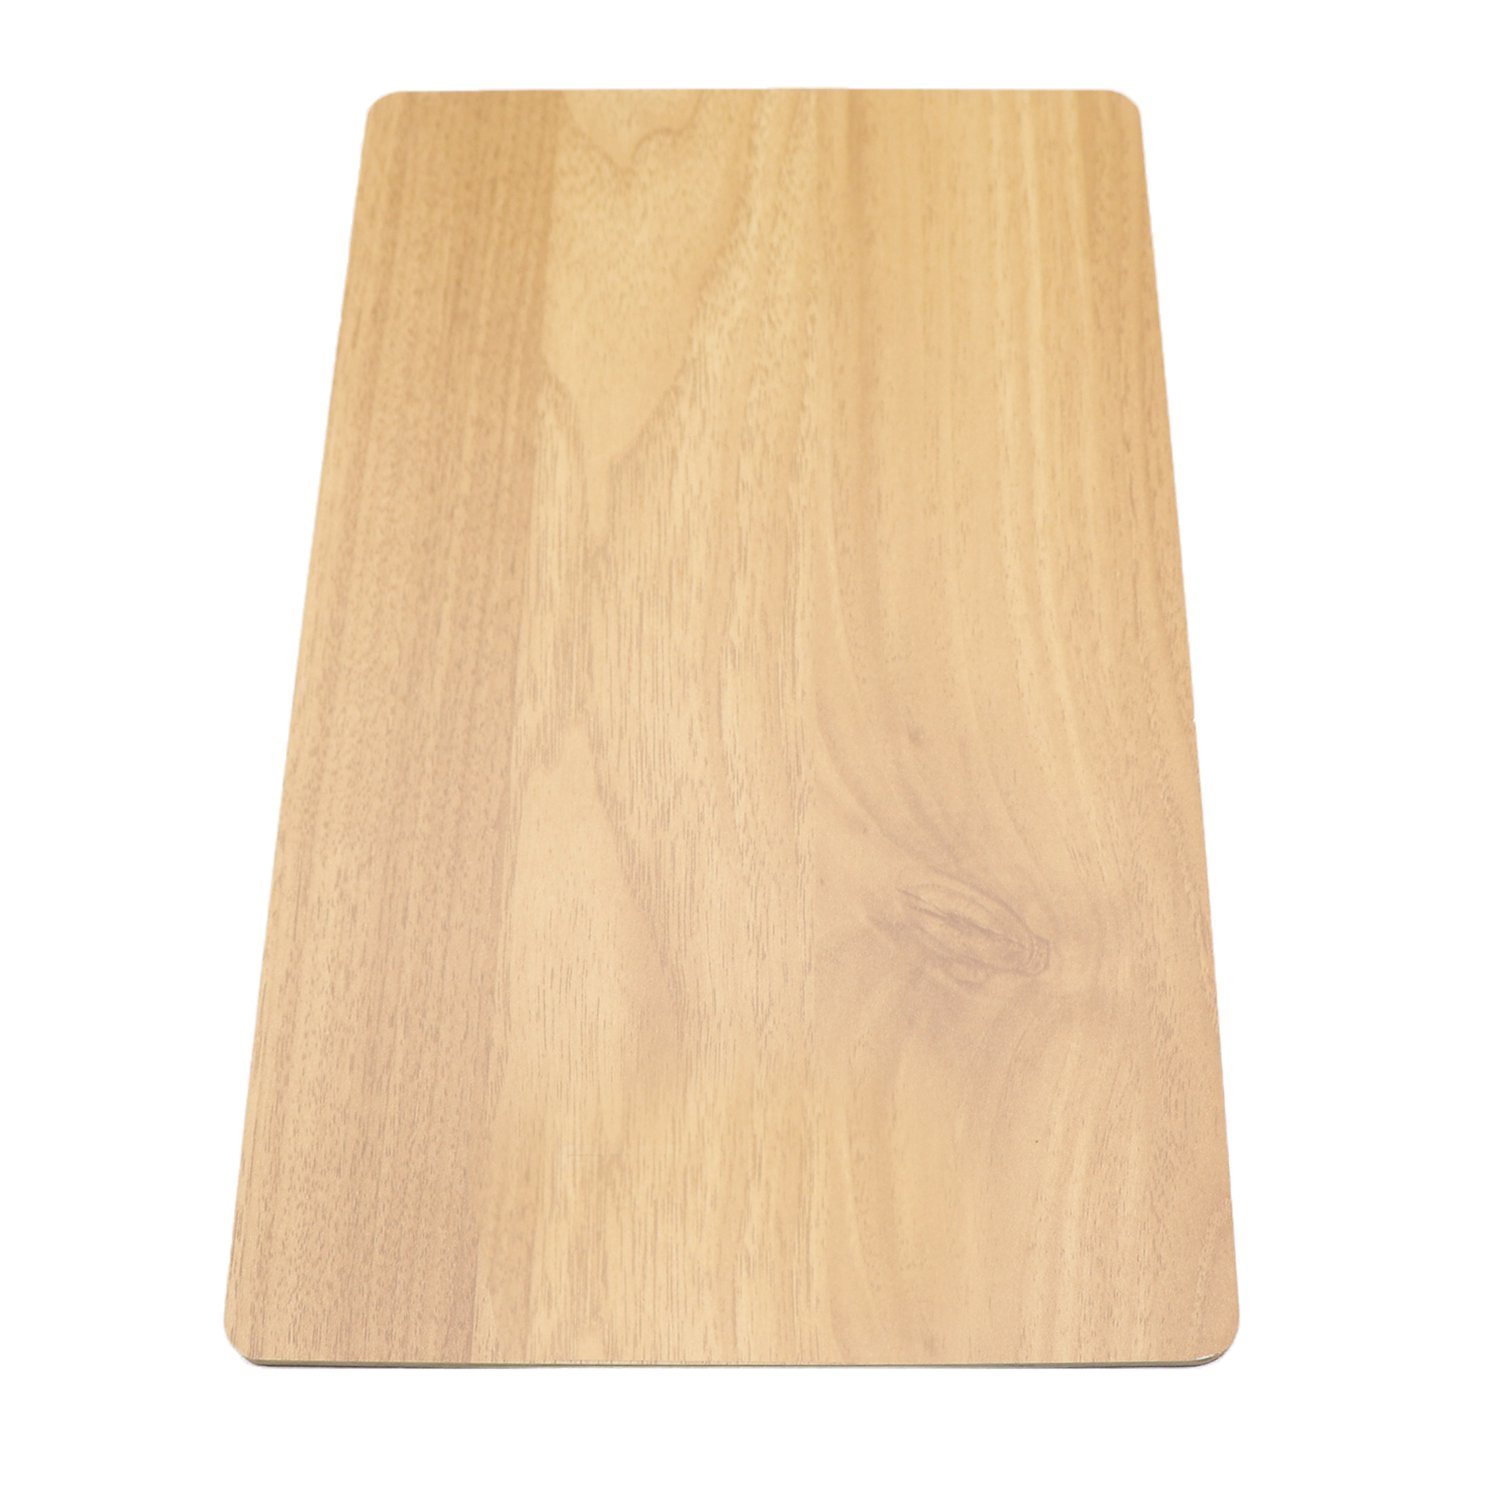 3mm 12mm 15mm 18mm Plain Raw Wood Veneer Laminated HDF MDF High Gloss Melamine Board